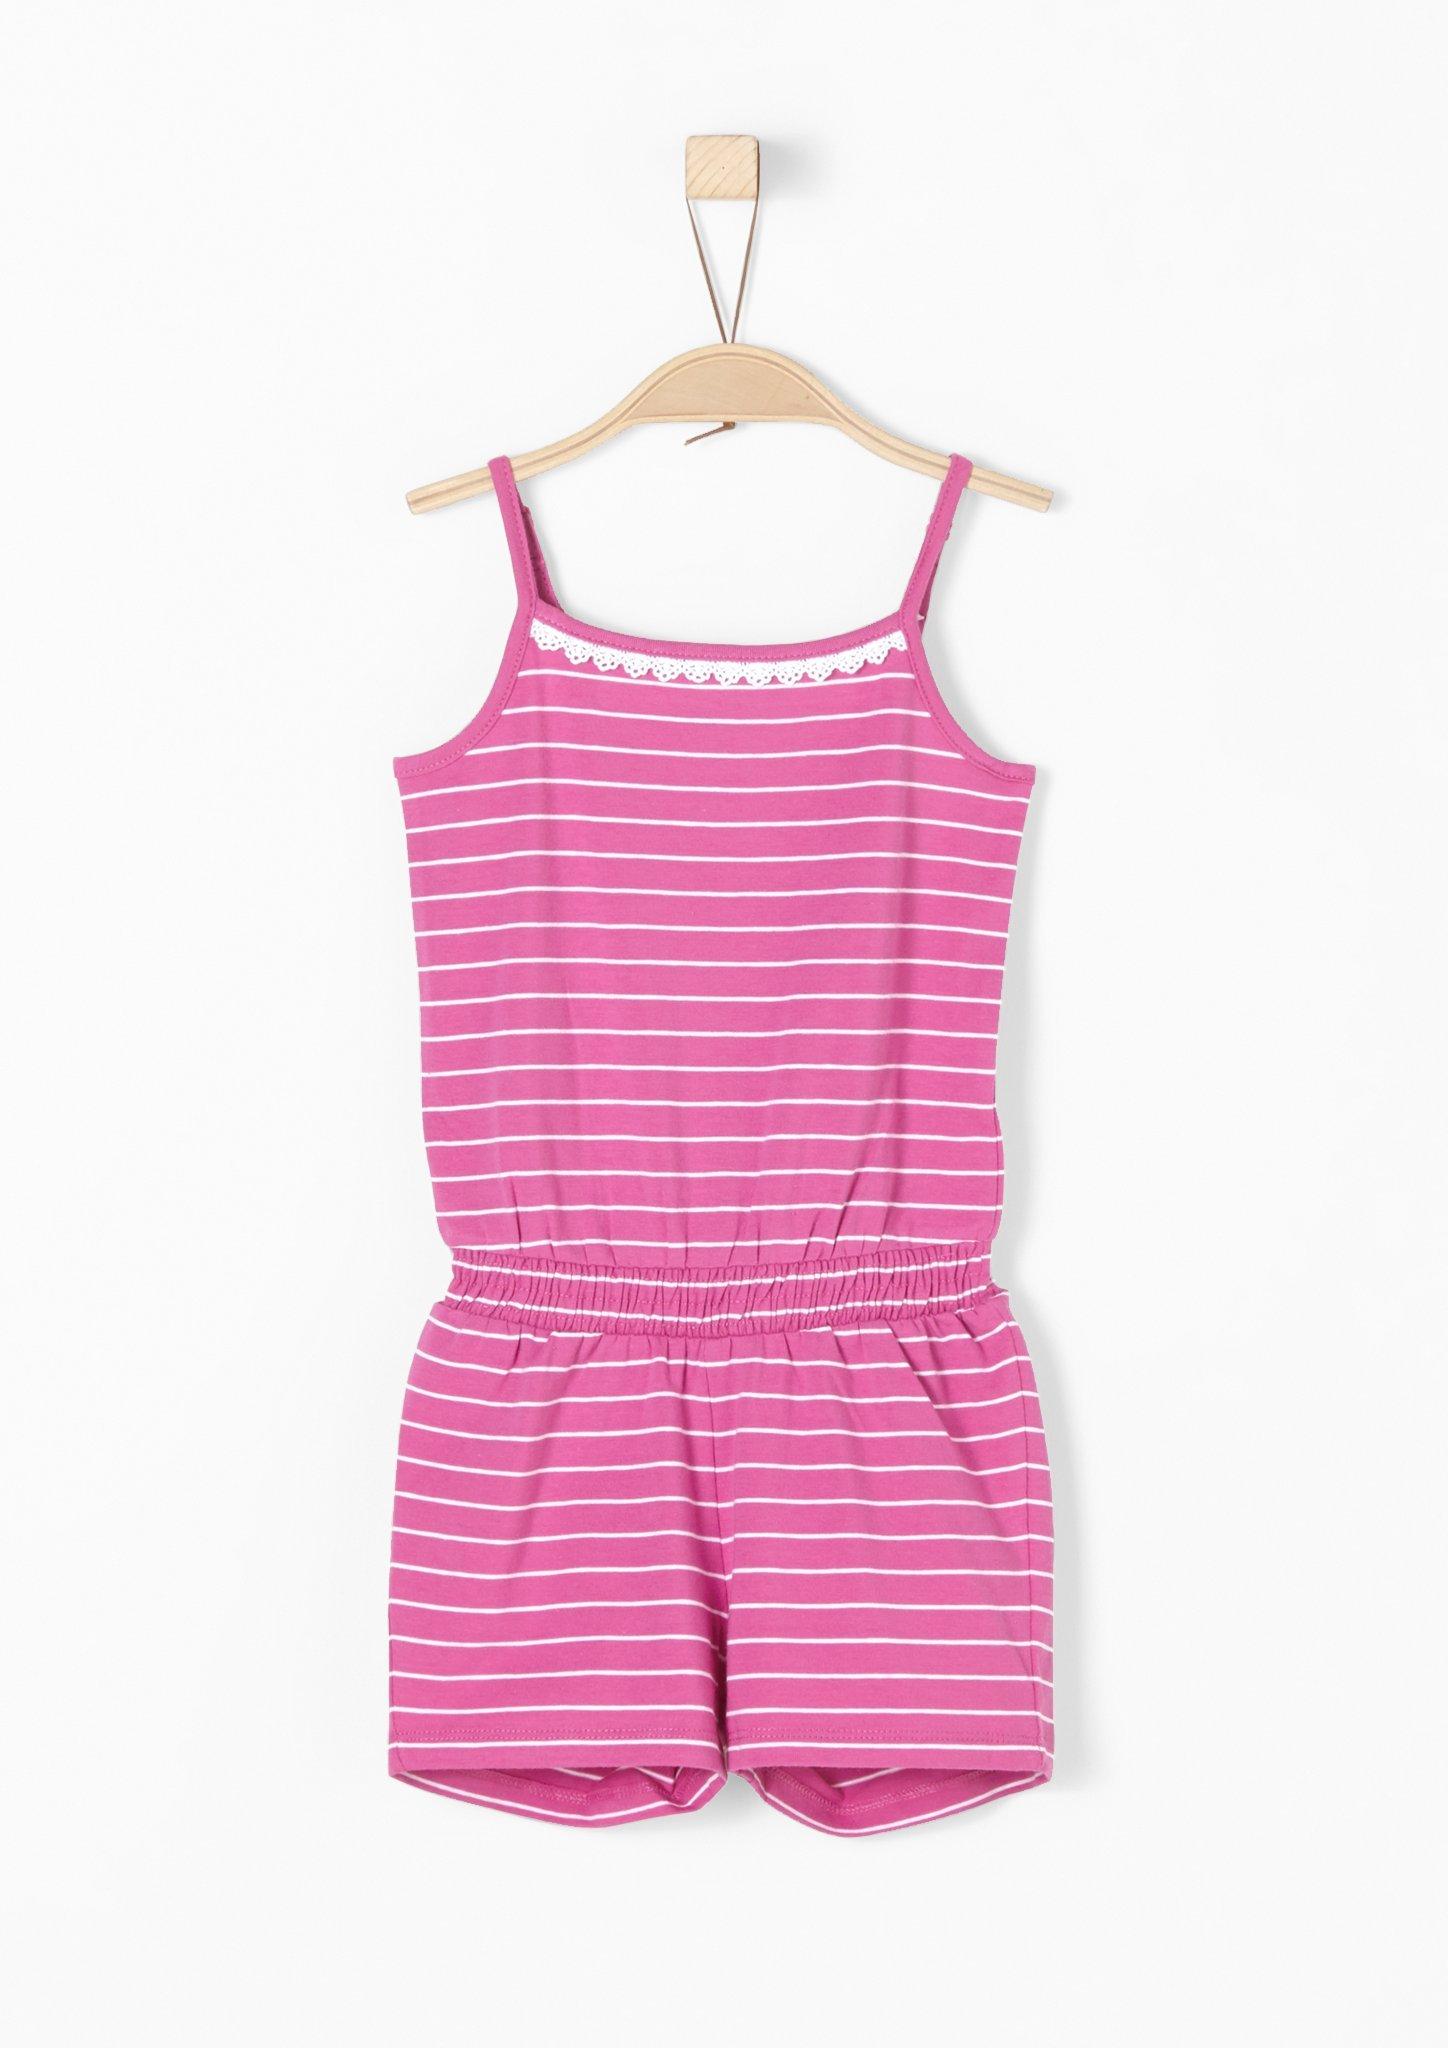 Dresses & overalls: Order now in the s.Oliver online shop